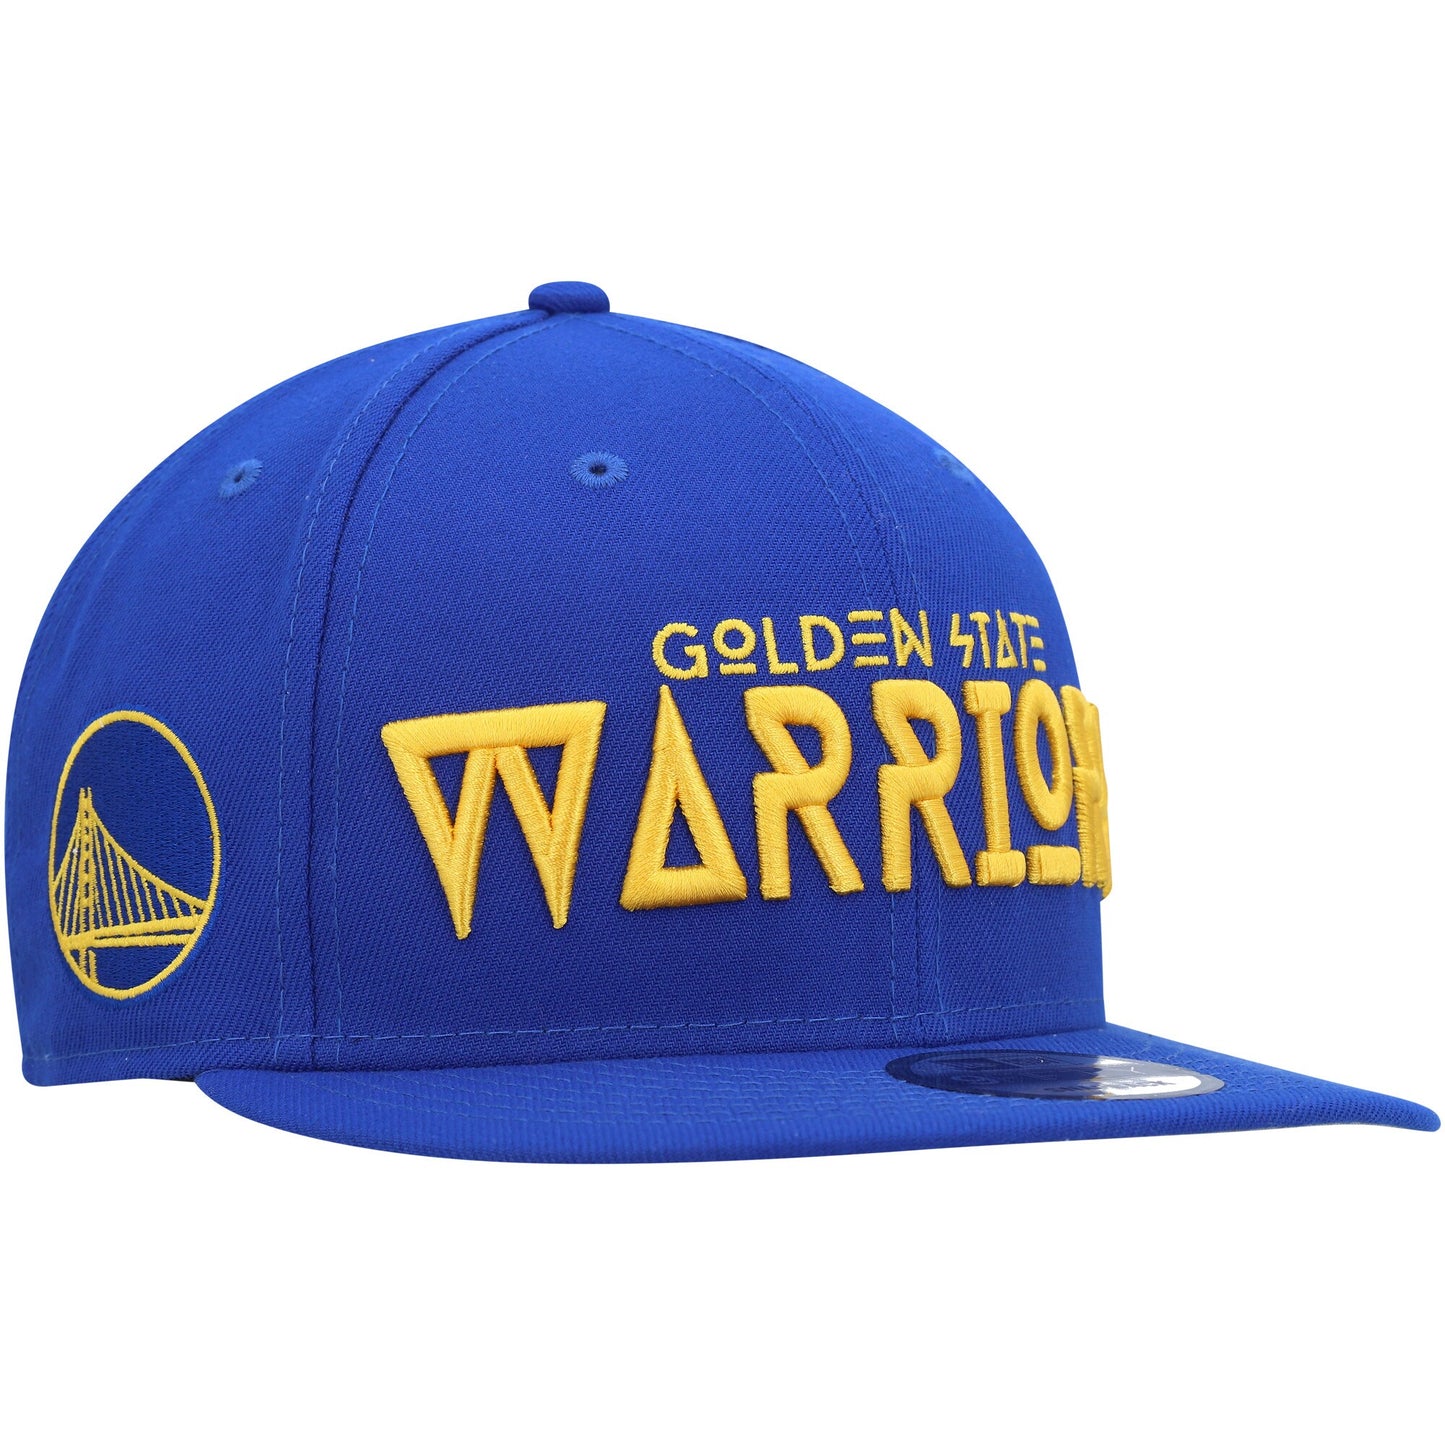 Golden State Warriors New Era Rocker 9FIFTY Snapback Hat - Royal